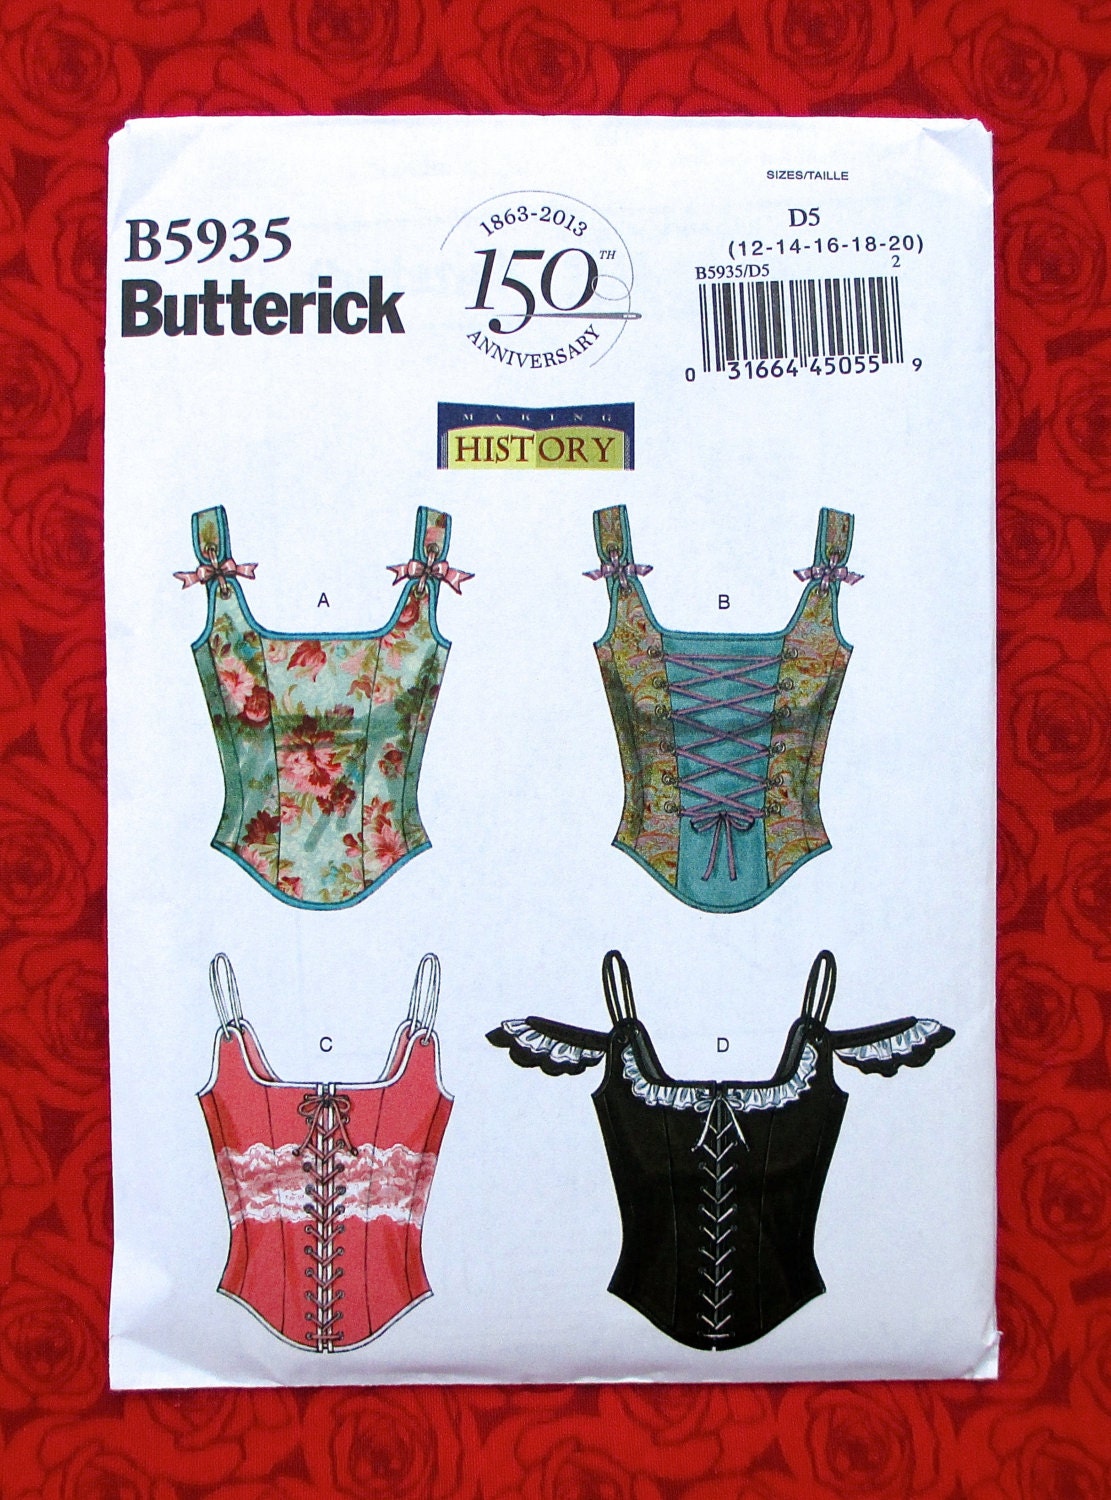 Butterick Sewing Pattern B5935, Corset Bustier, Victorian Fashion